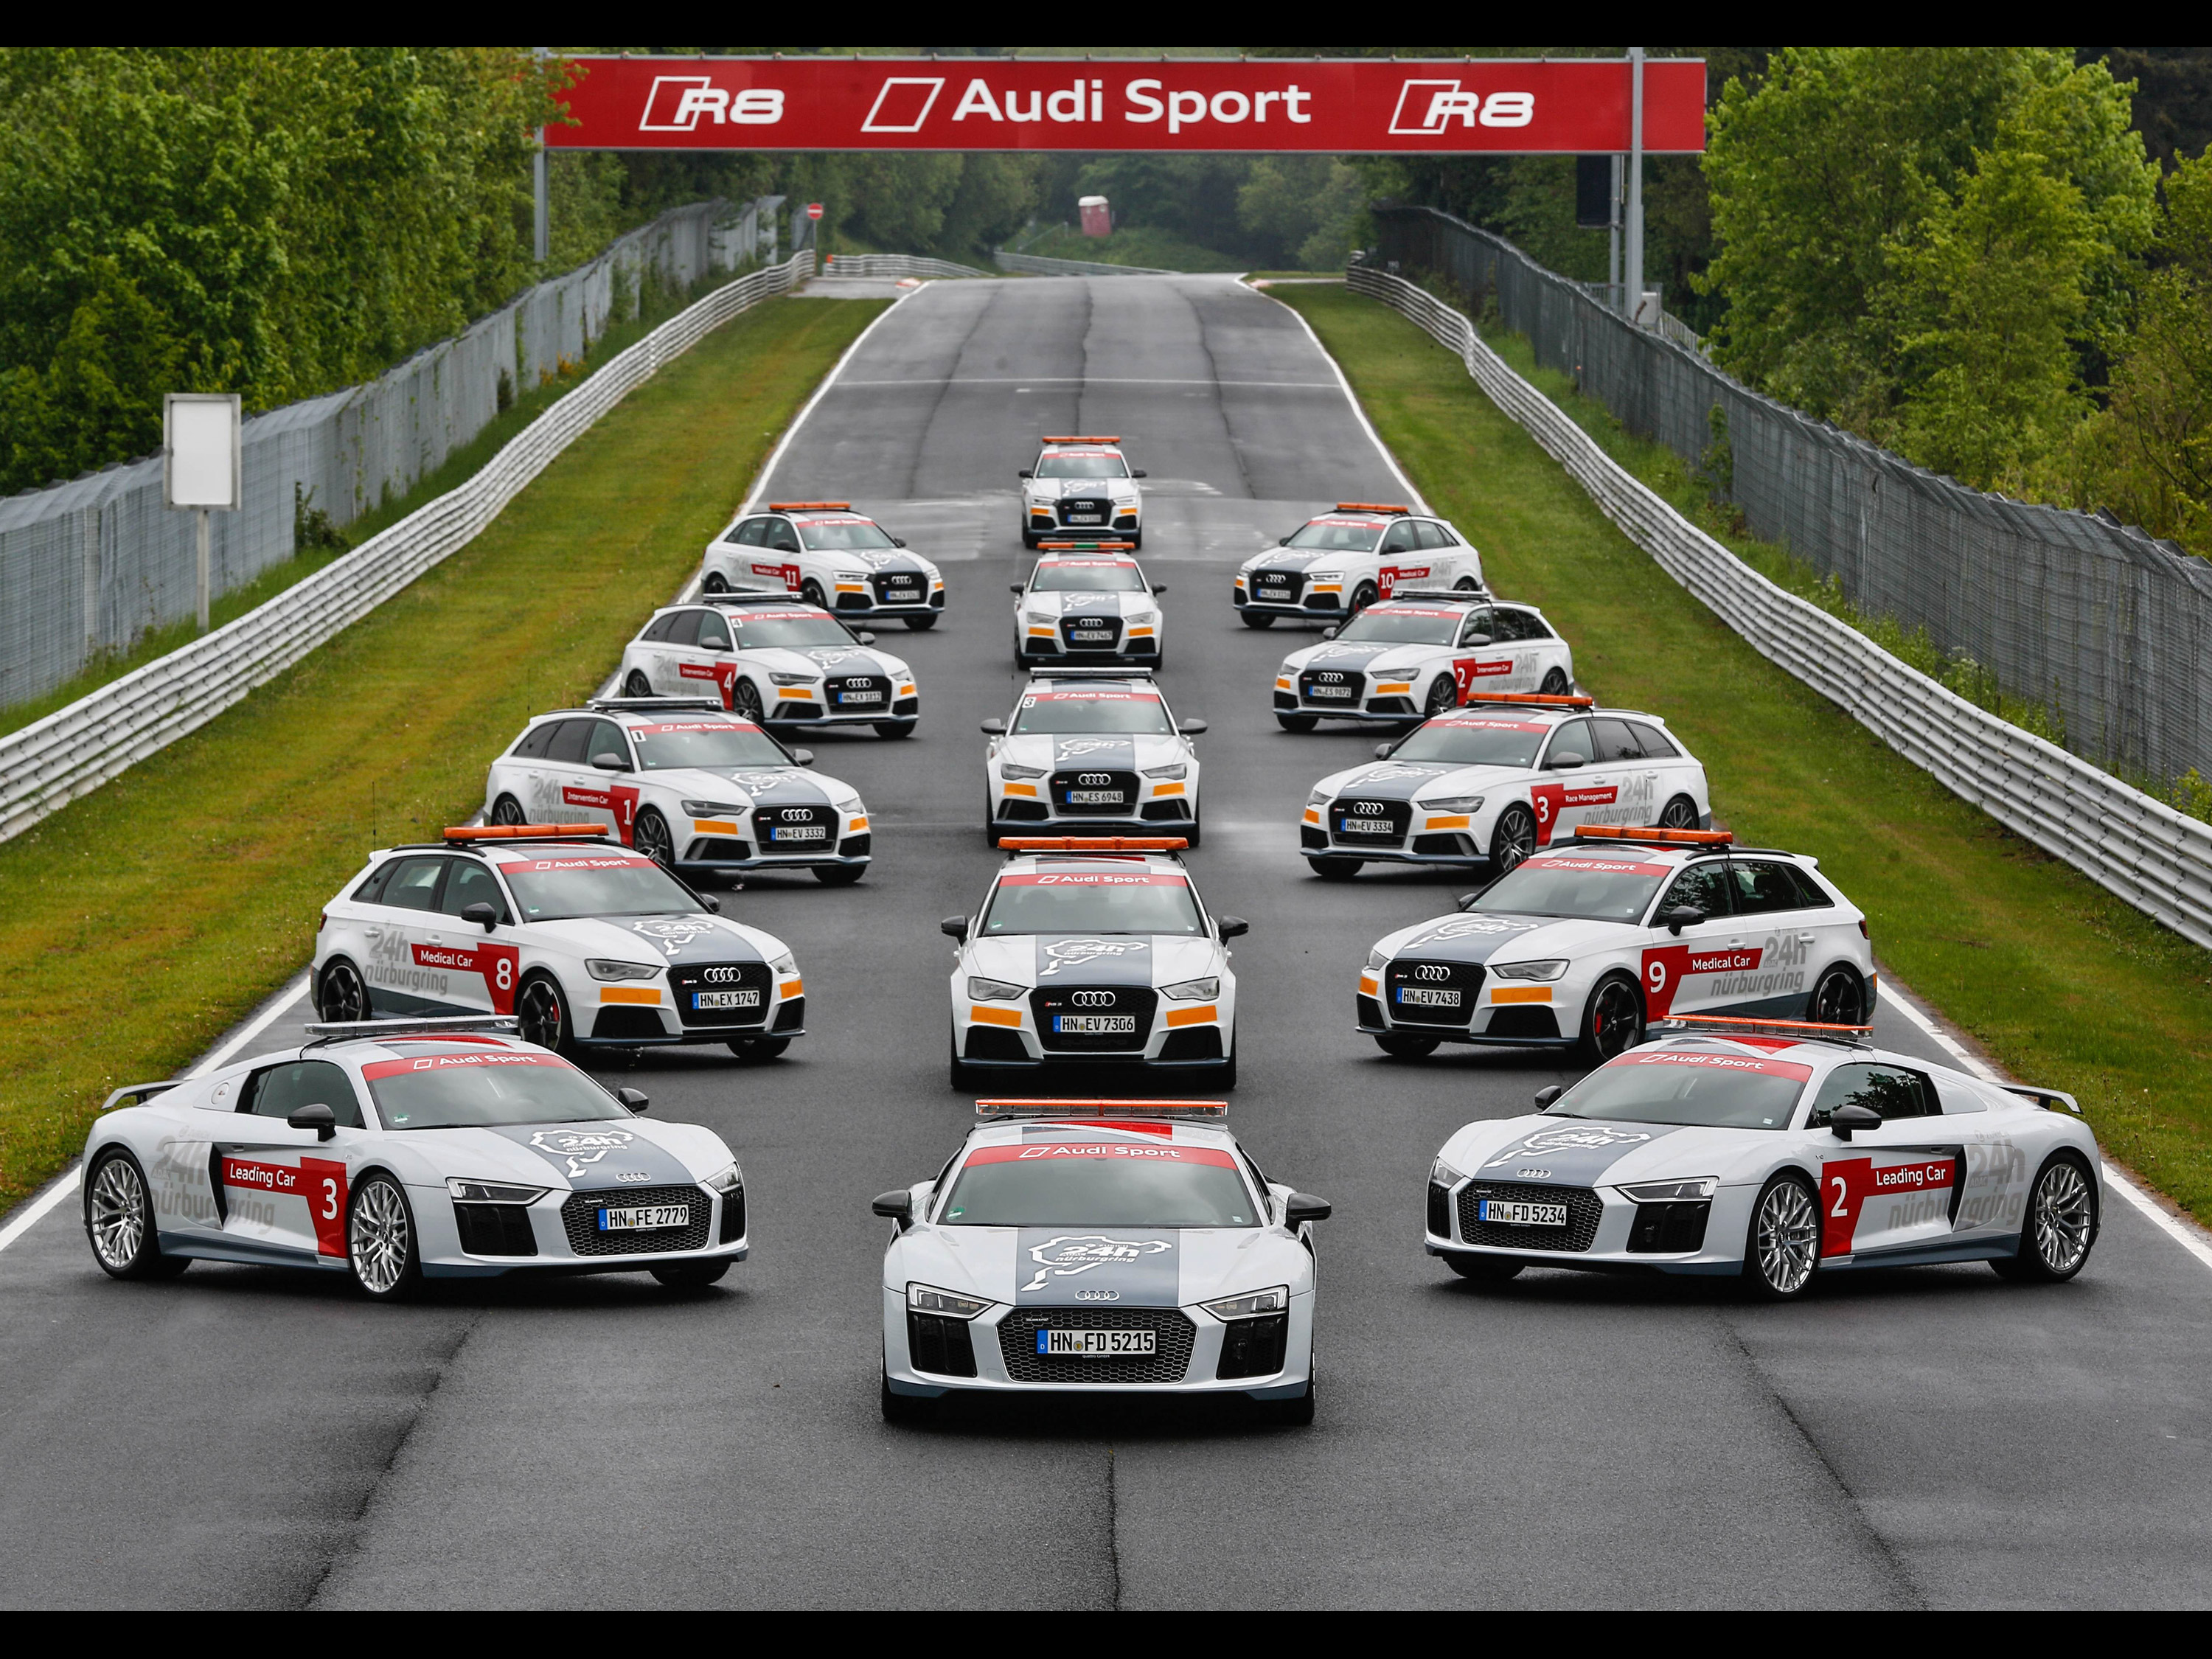 Audi 24h Nurburgring Official Cars 2016 アウディに嵌まる 壁紙画像ブログ